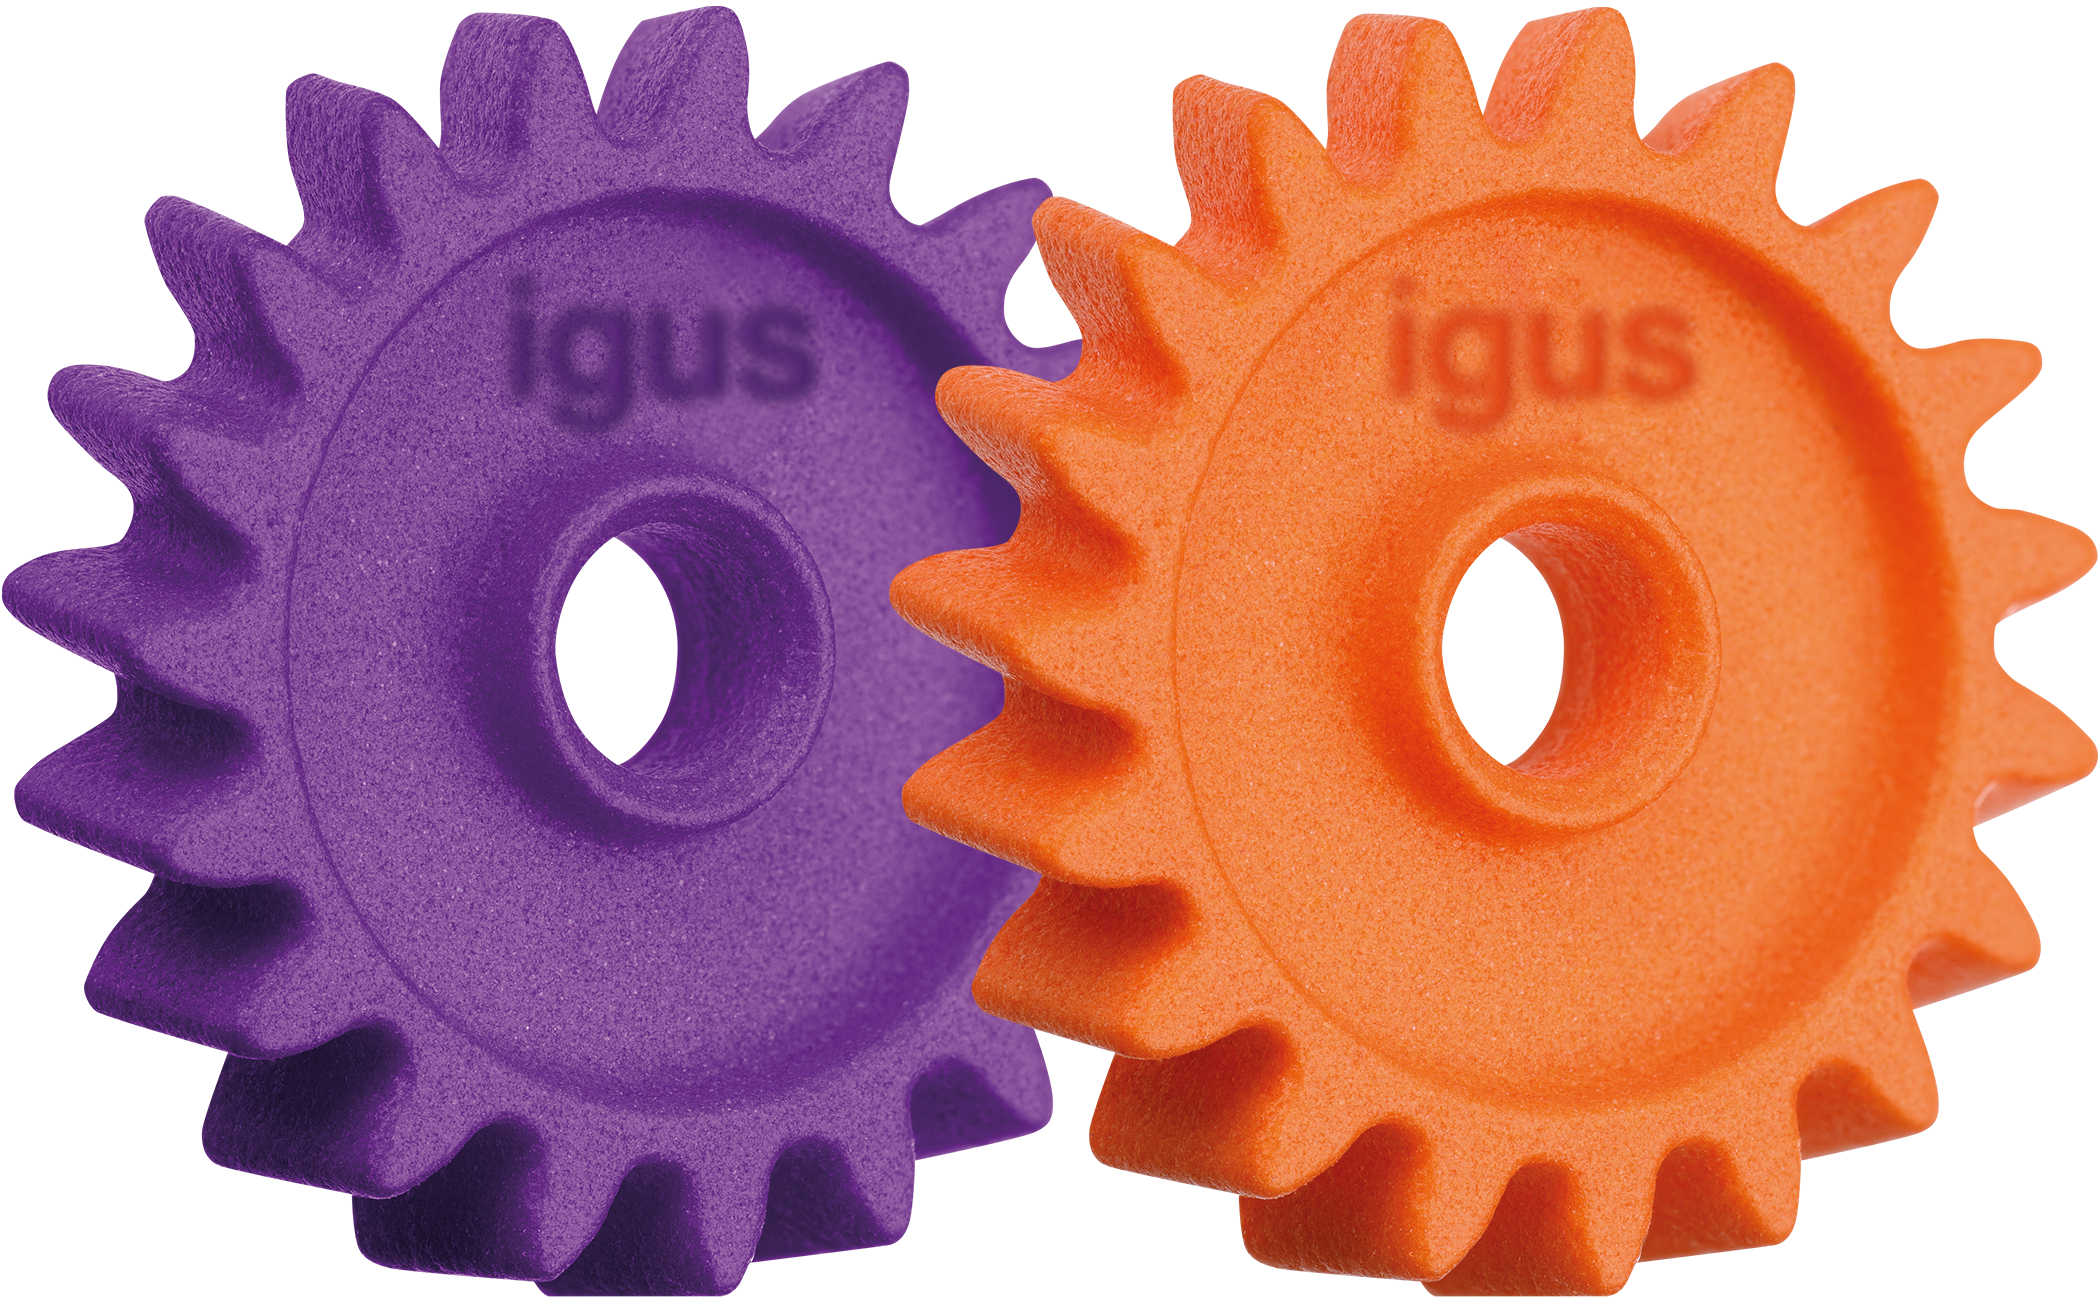 3D print_iglidur_i6_gears_colored_lila_orange